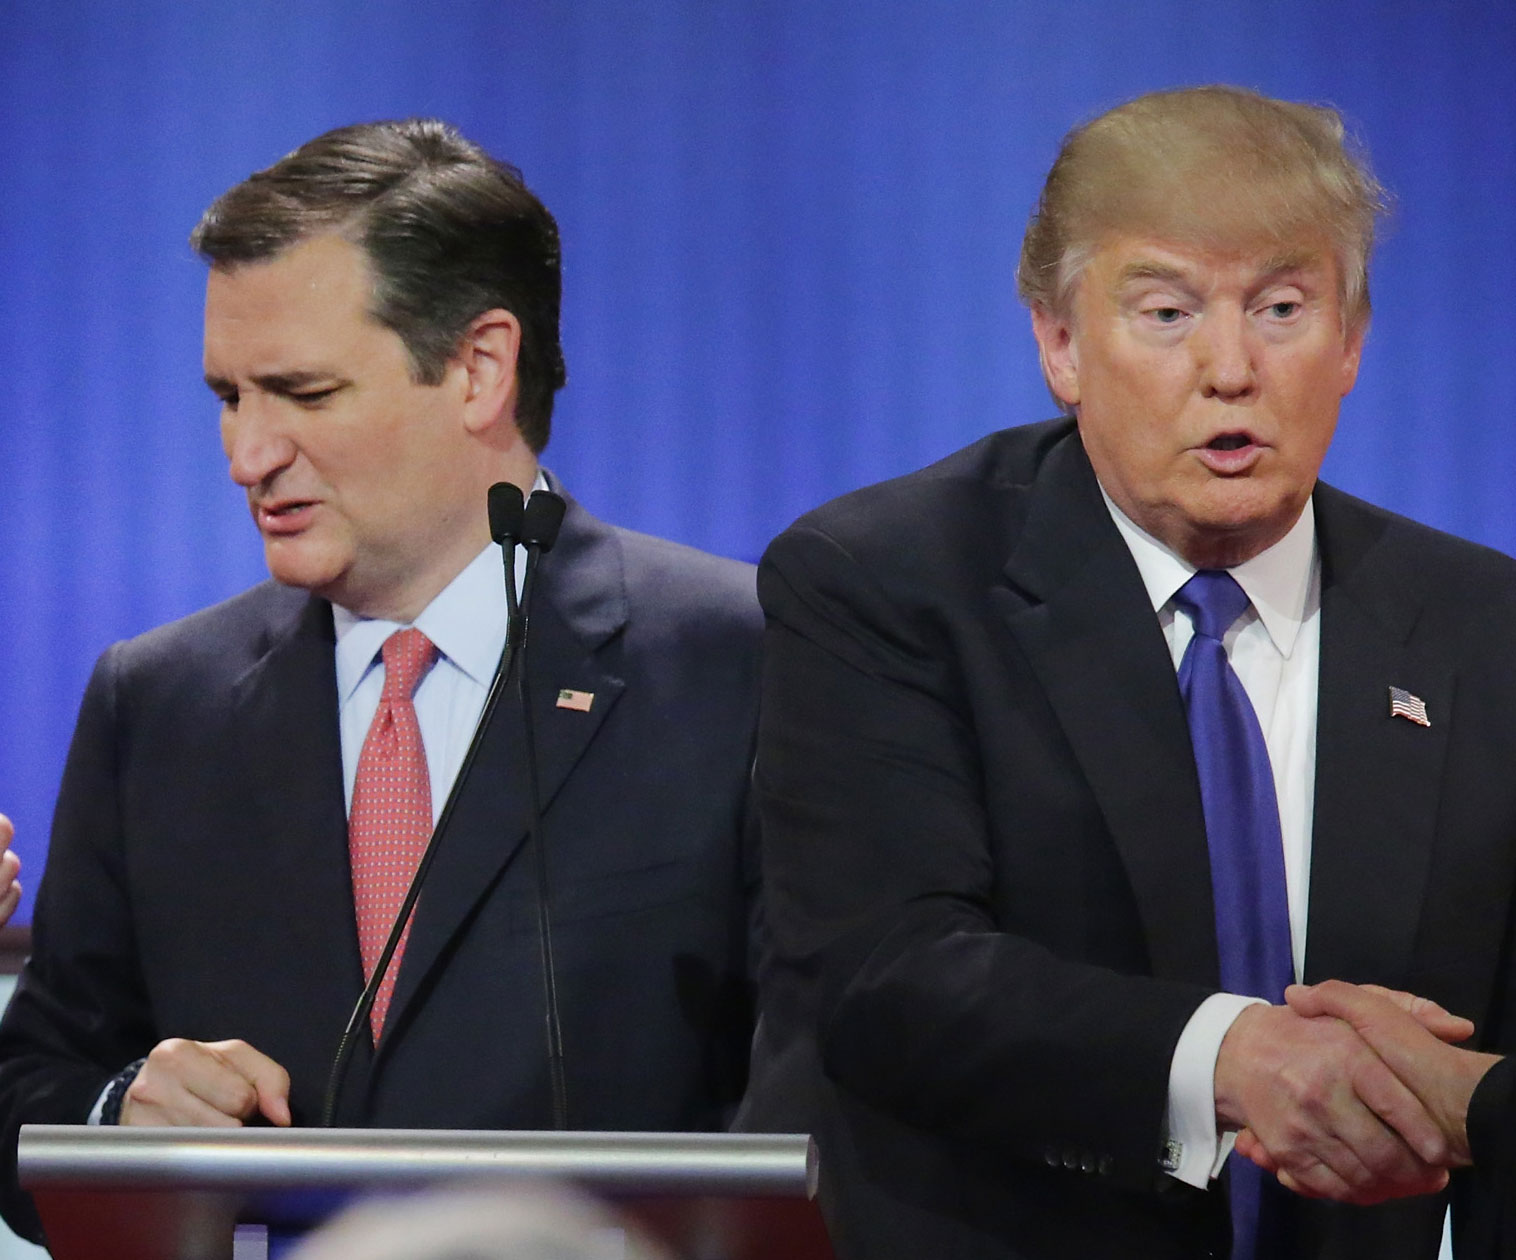 Republican presidential candidates, Senator Ted Cruz and Donald Trump, Detroit, Michigan, March 3, 2016